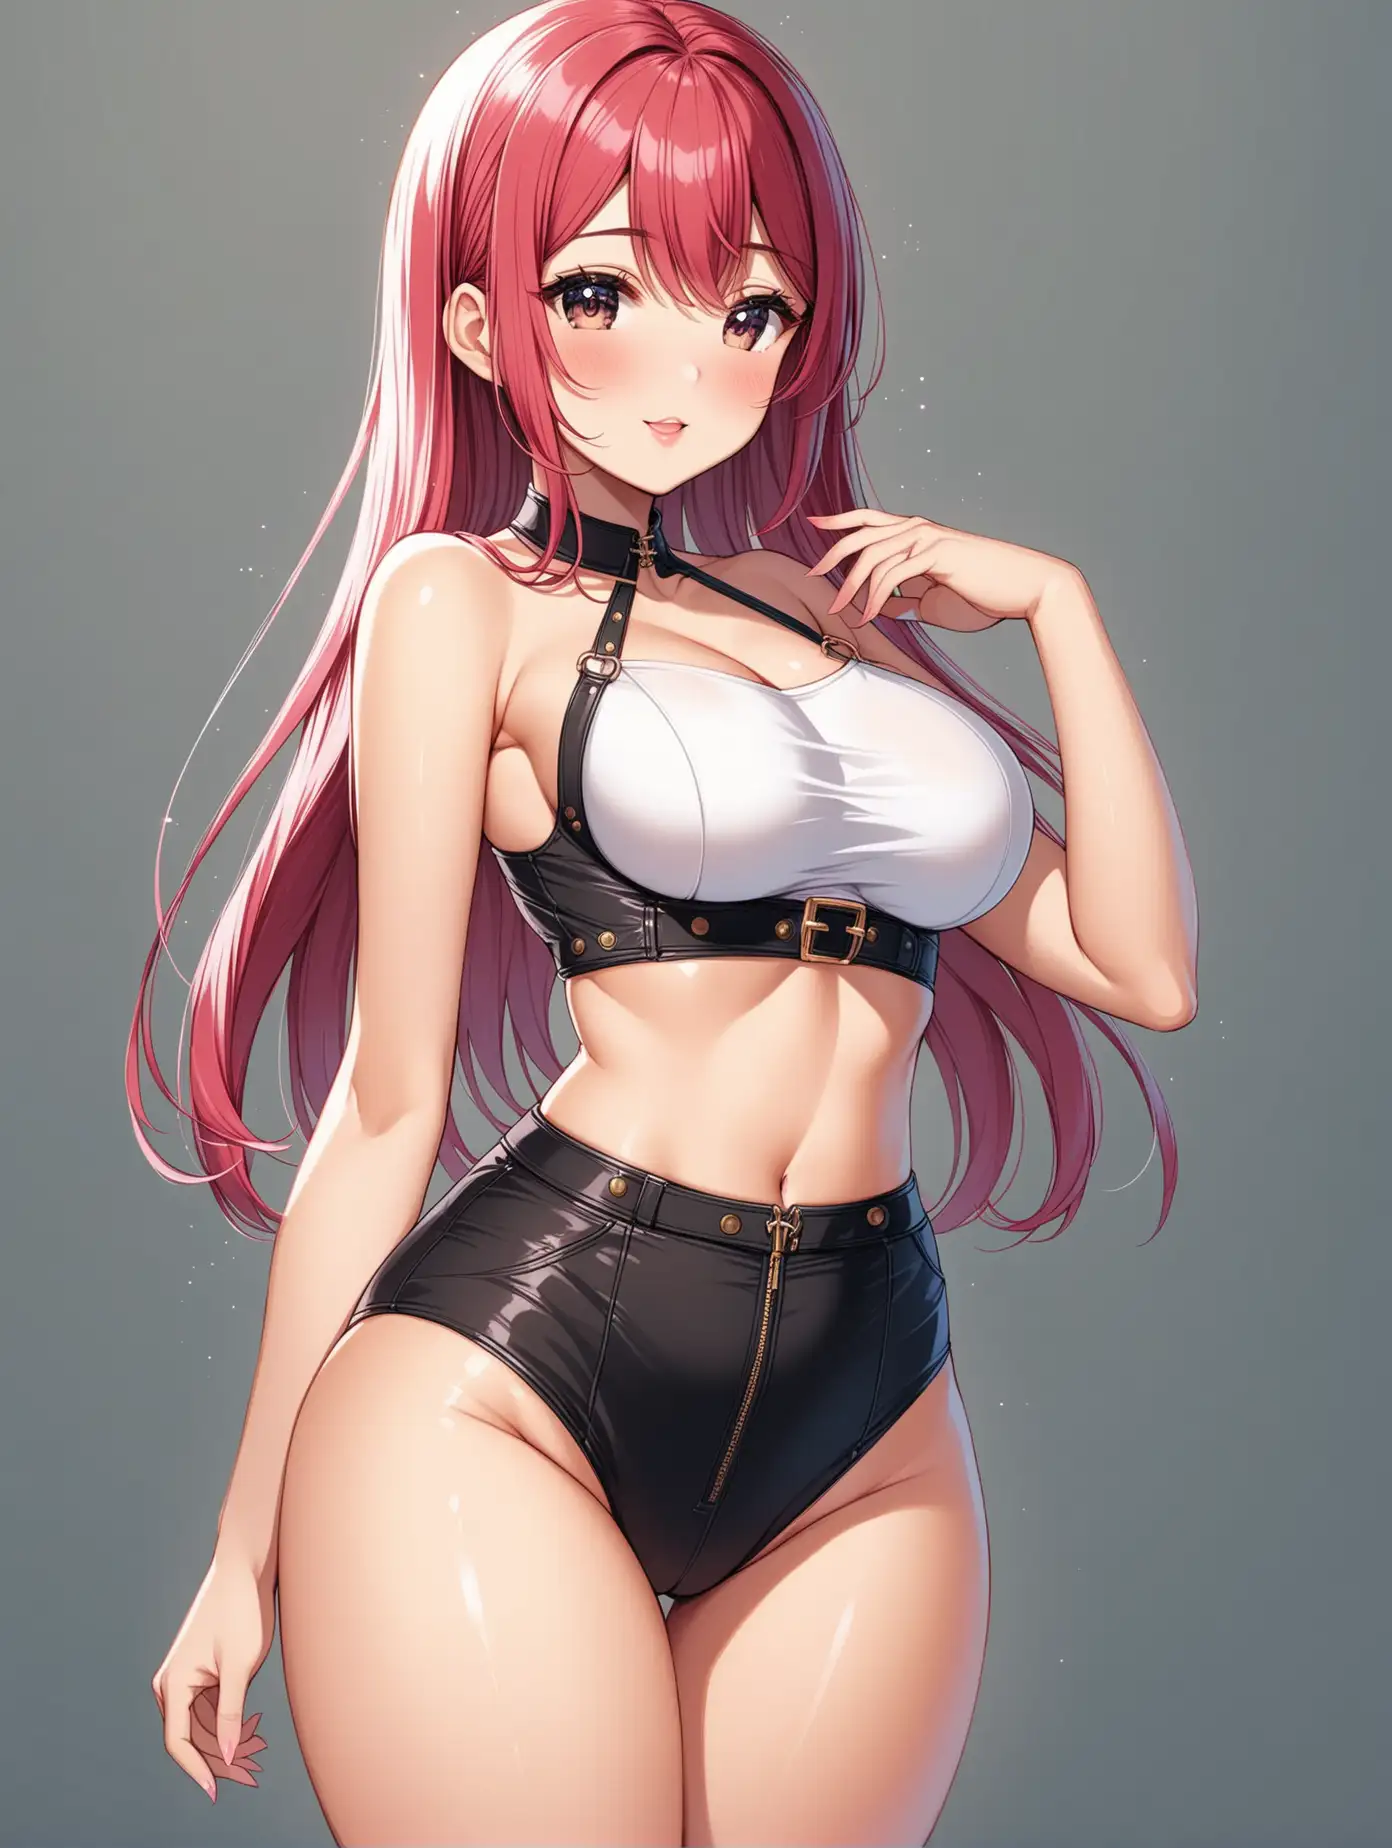 Beautiful, sexy, hot waifu small waist, big ass, cute outfit